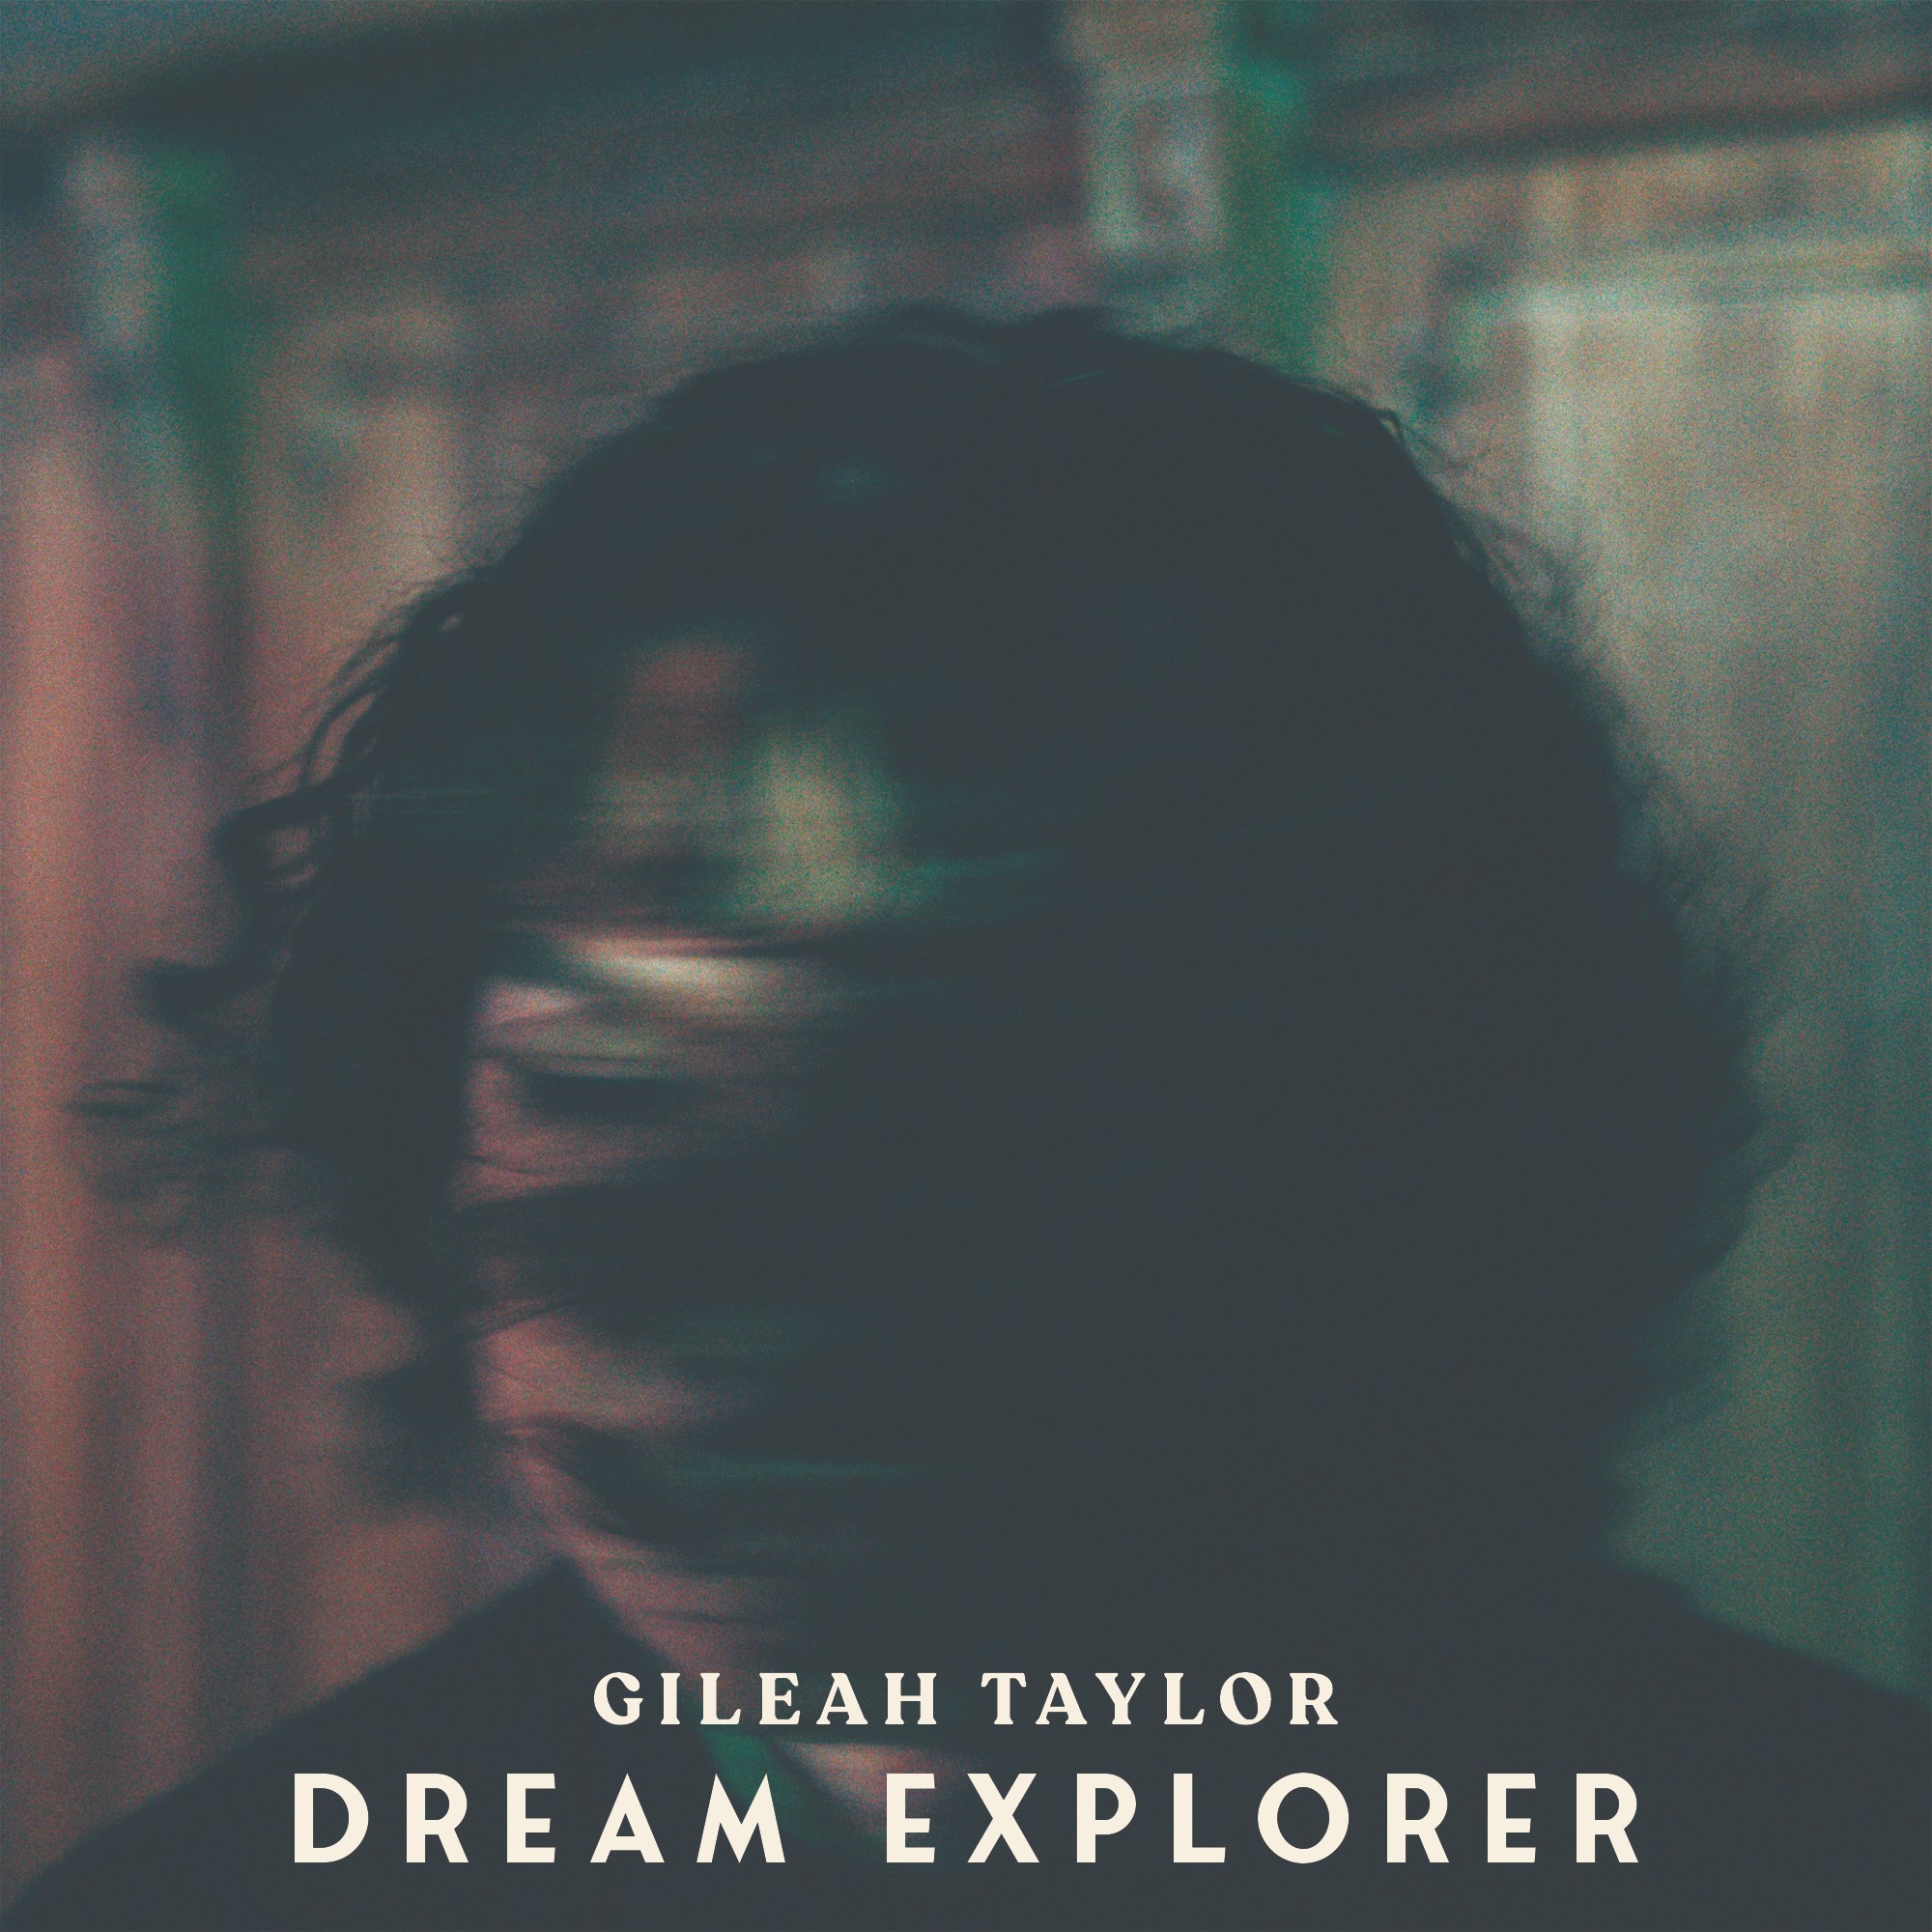 Gileah Taylor “Dream Explorer” single artwork